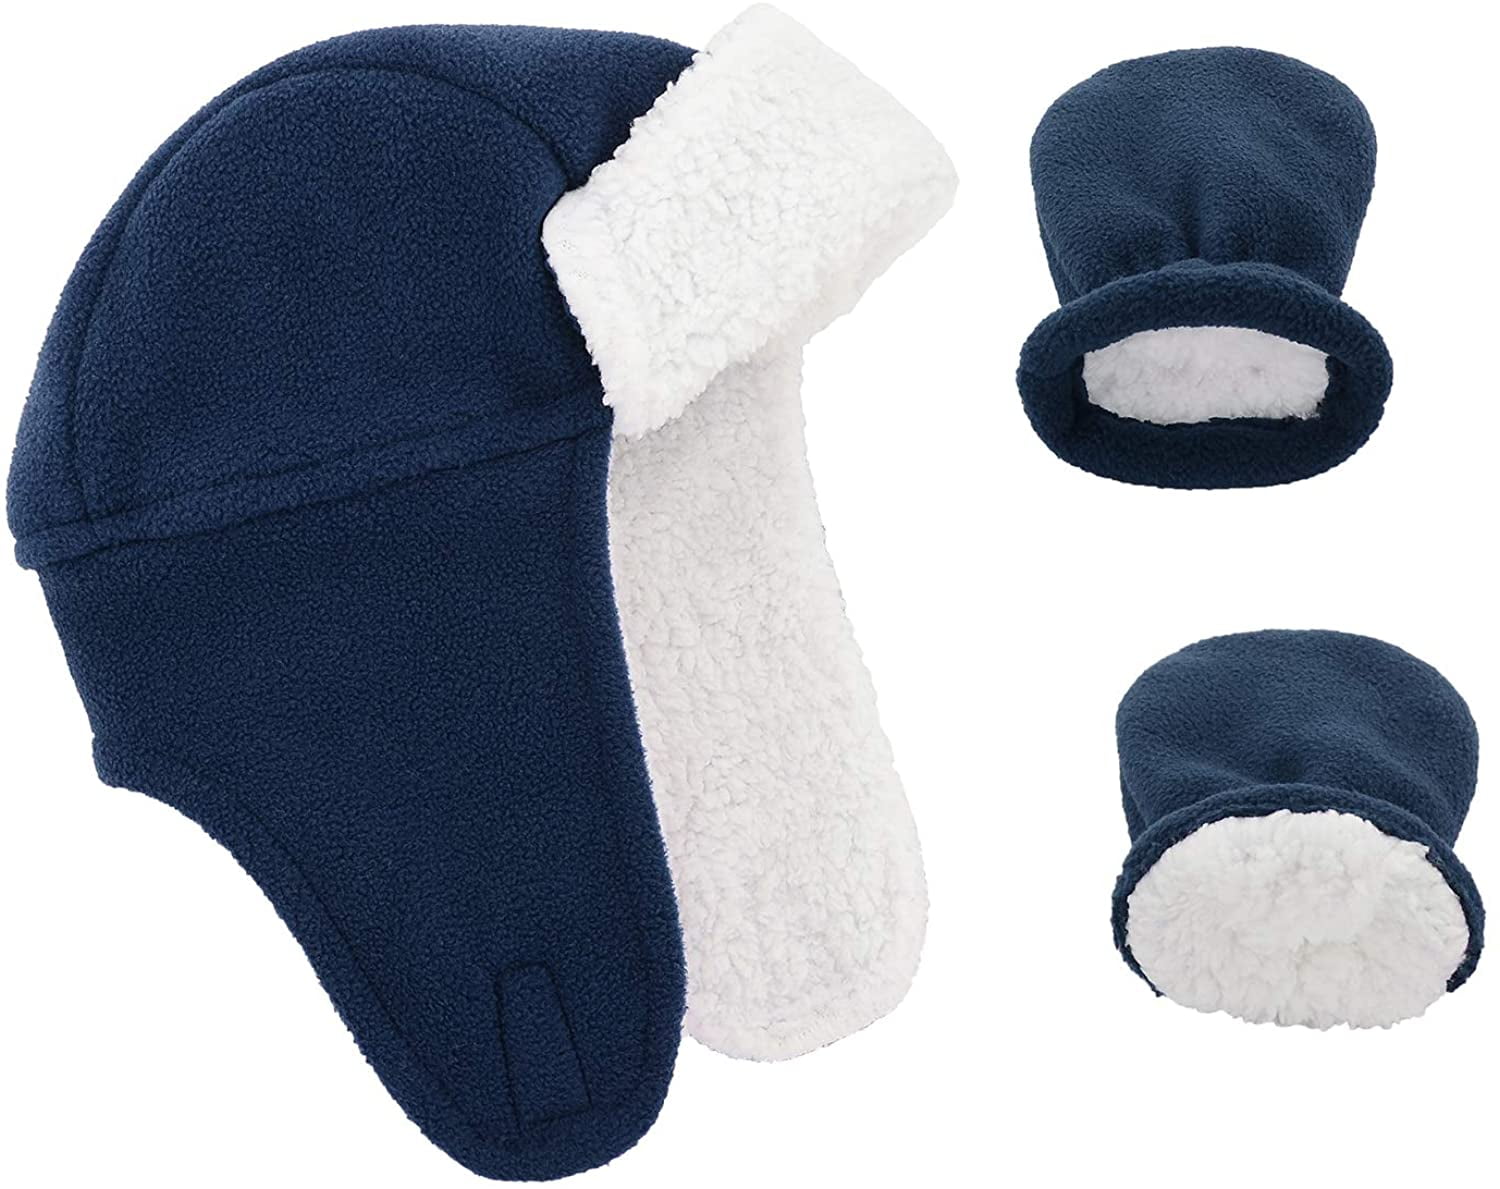 Zando Baby Mittens for Baby Boys Sherpa Lined Fleece Kids Winter Warm Gloves for Baby Boy Girl Unisex 